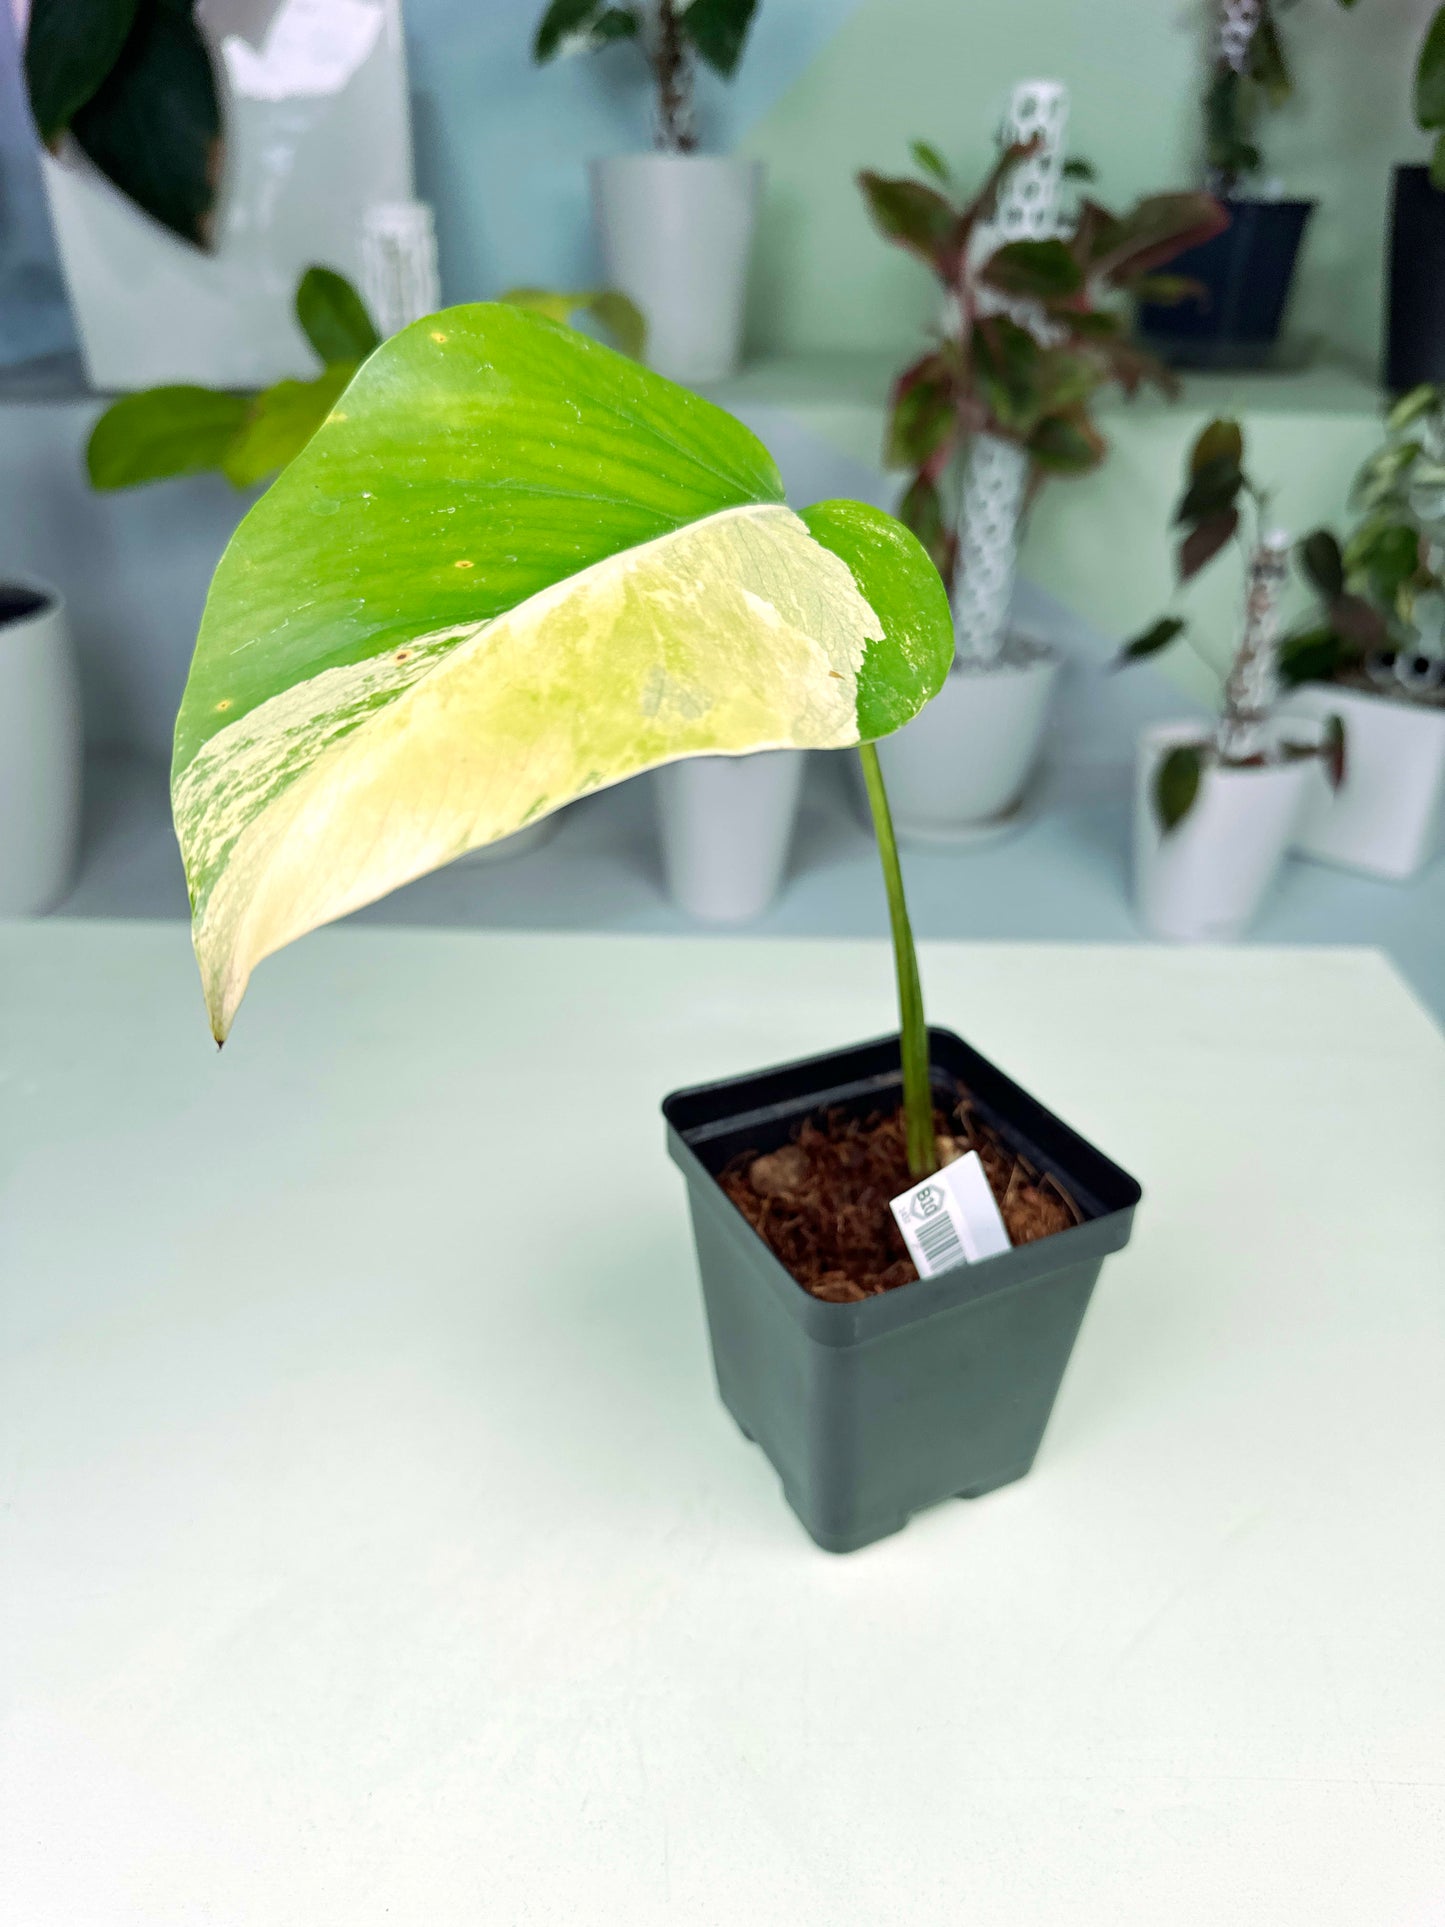 Monstera deliciosa "Aurea" tricolor variegated cutting (3:B10) [1437] | Rare Aroid | Exact Plant